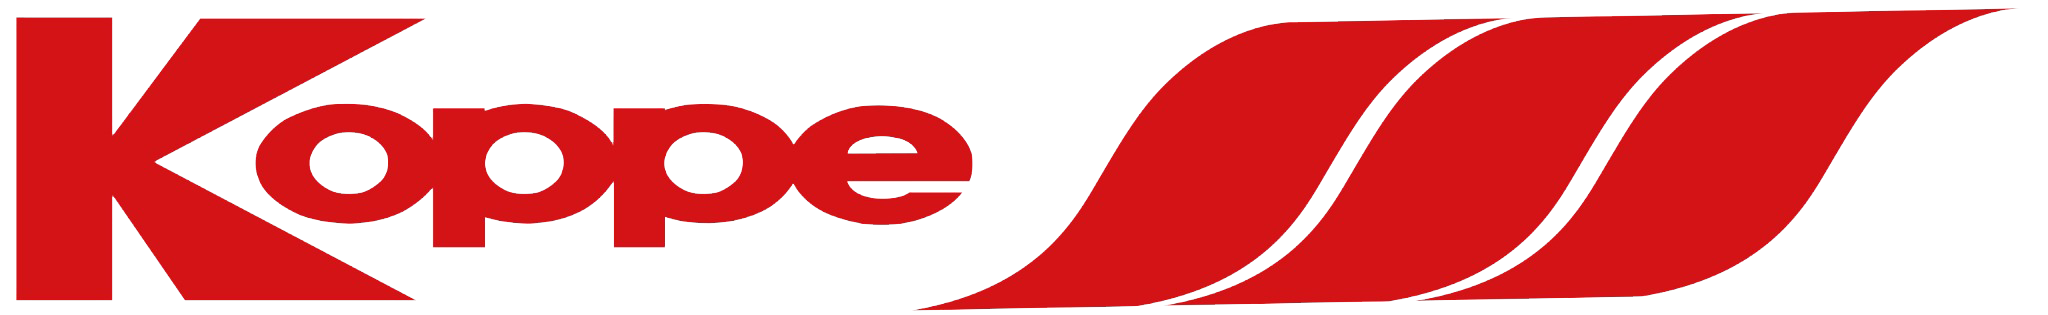 Das Ofenmobil - koppe logo